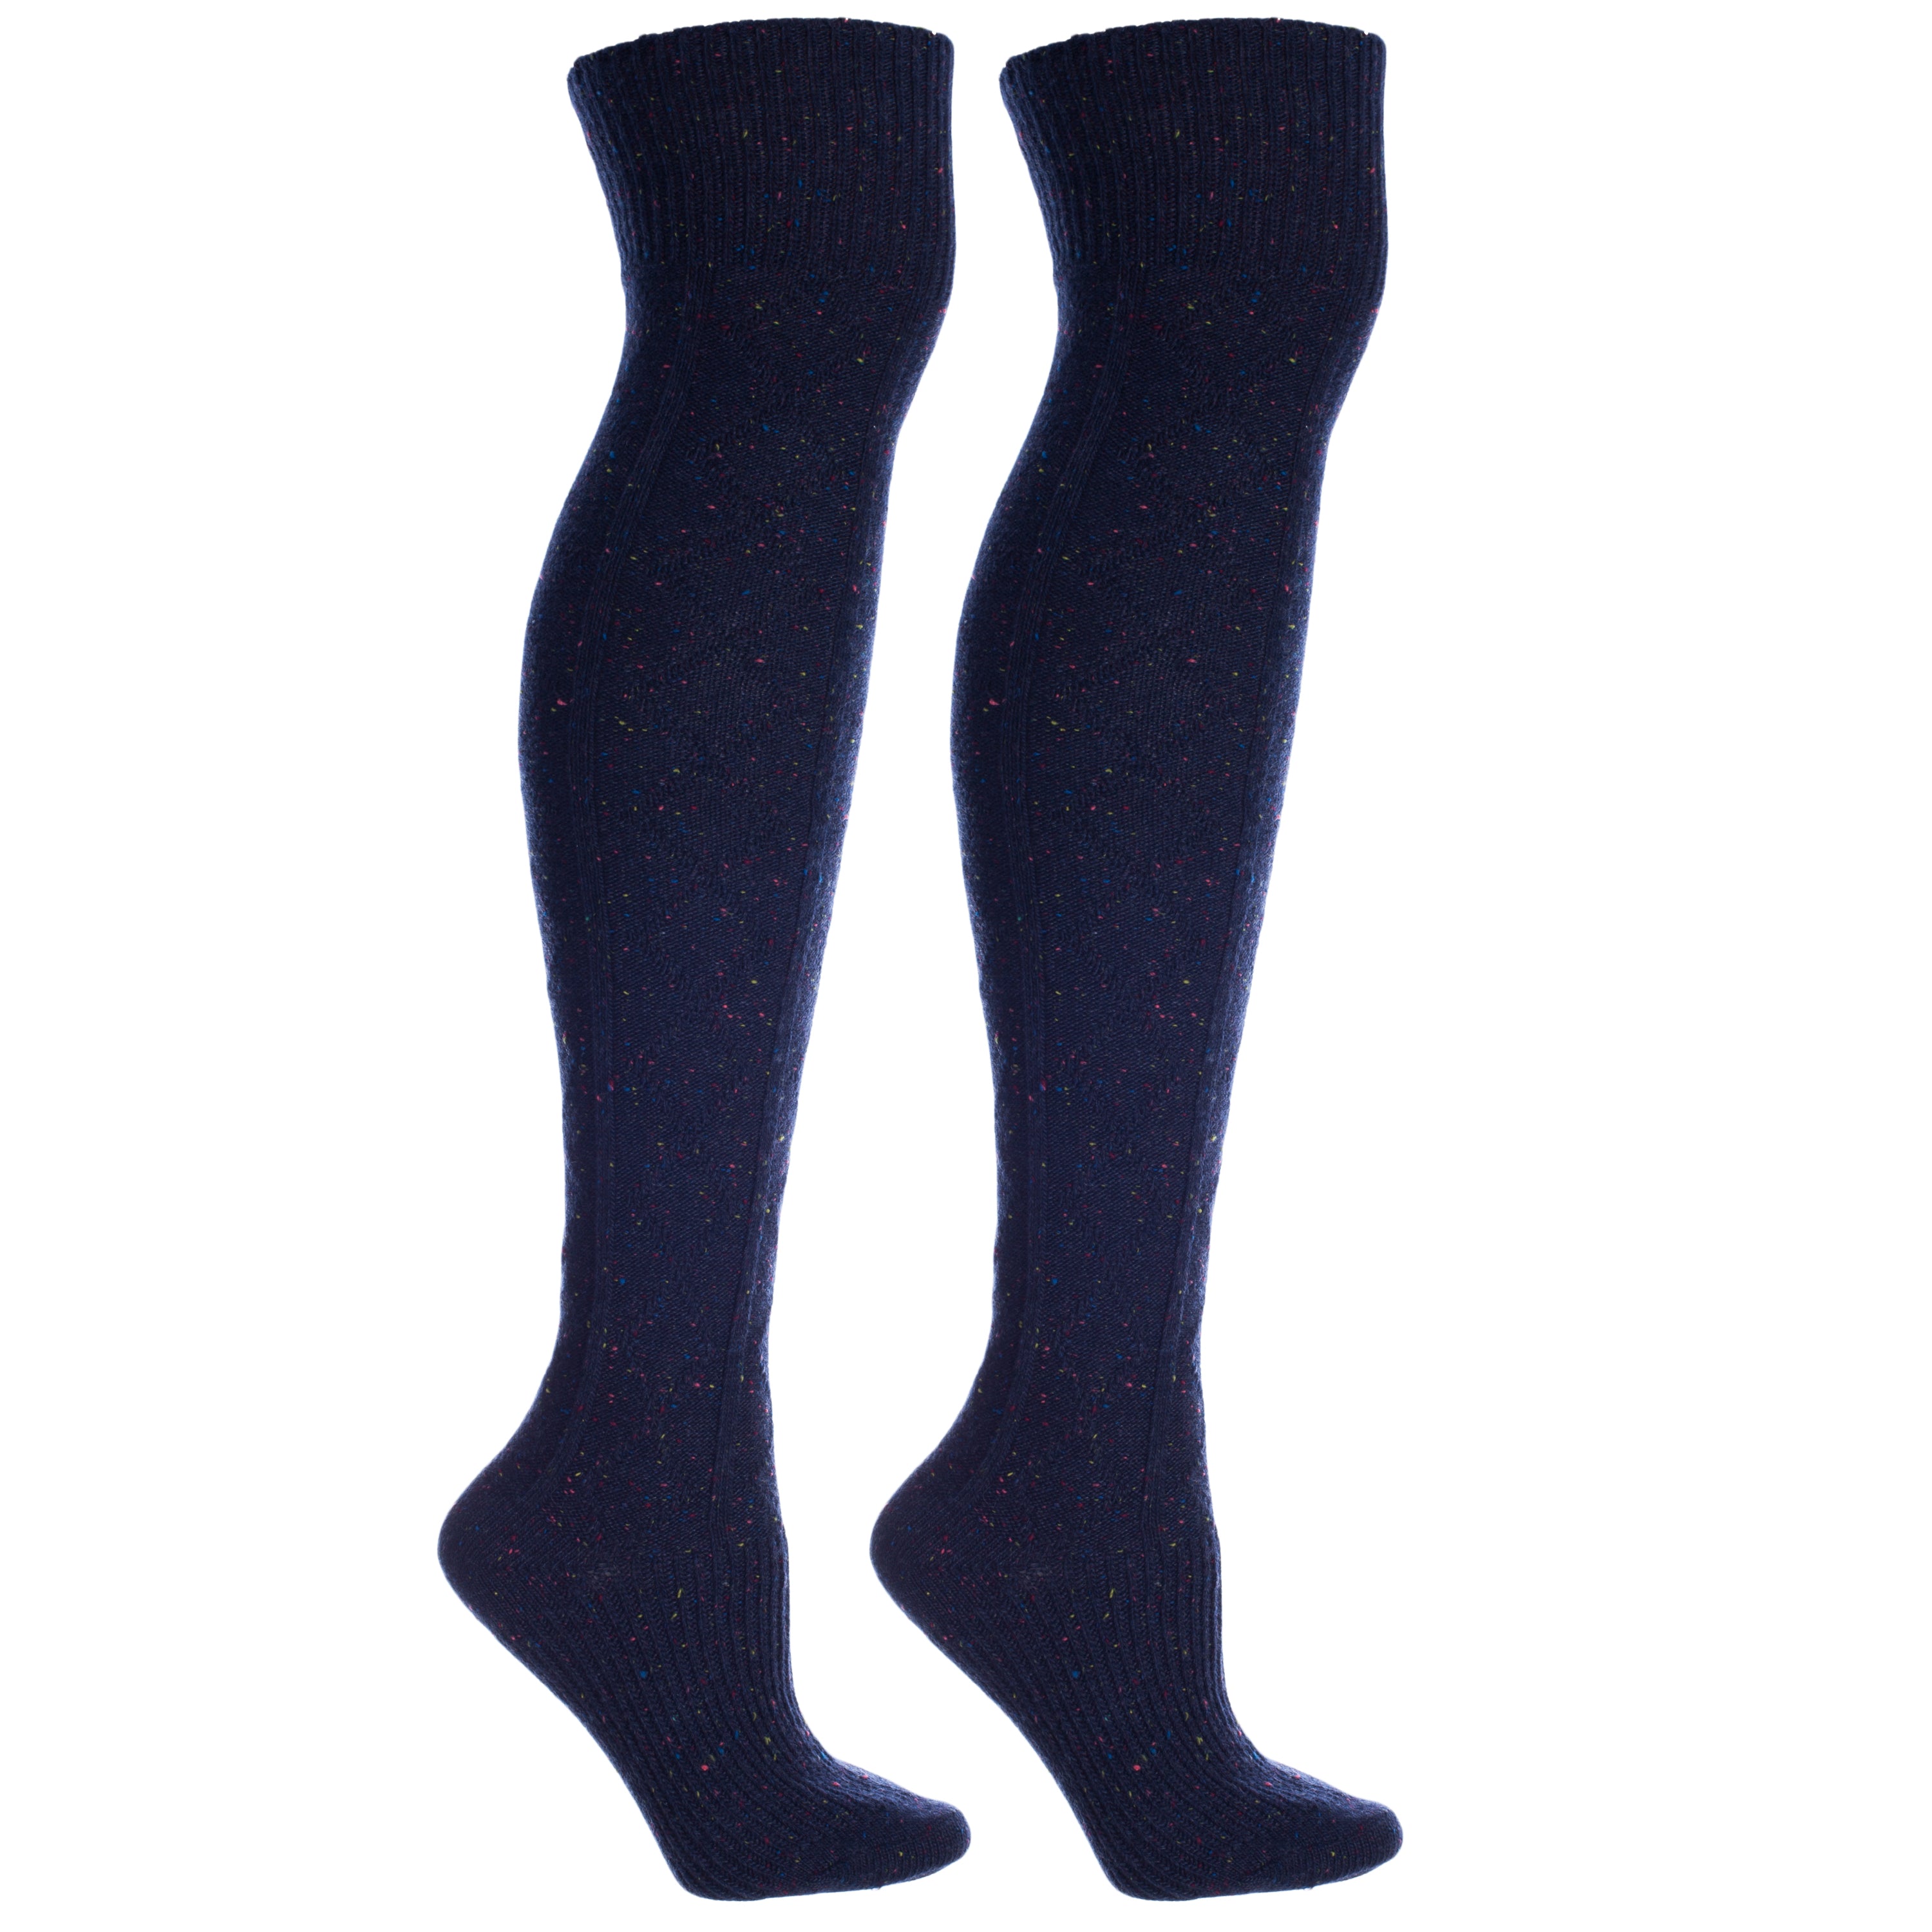 Women's Cream Wool Speckled Knee High Boot Socks, by MinxNY